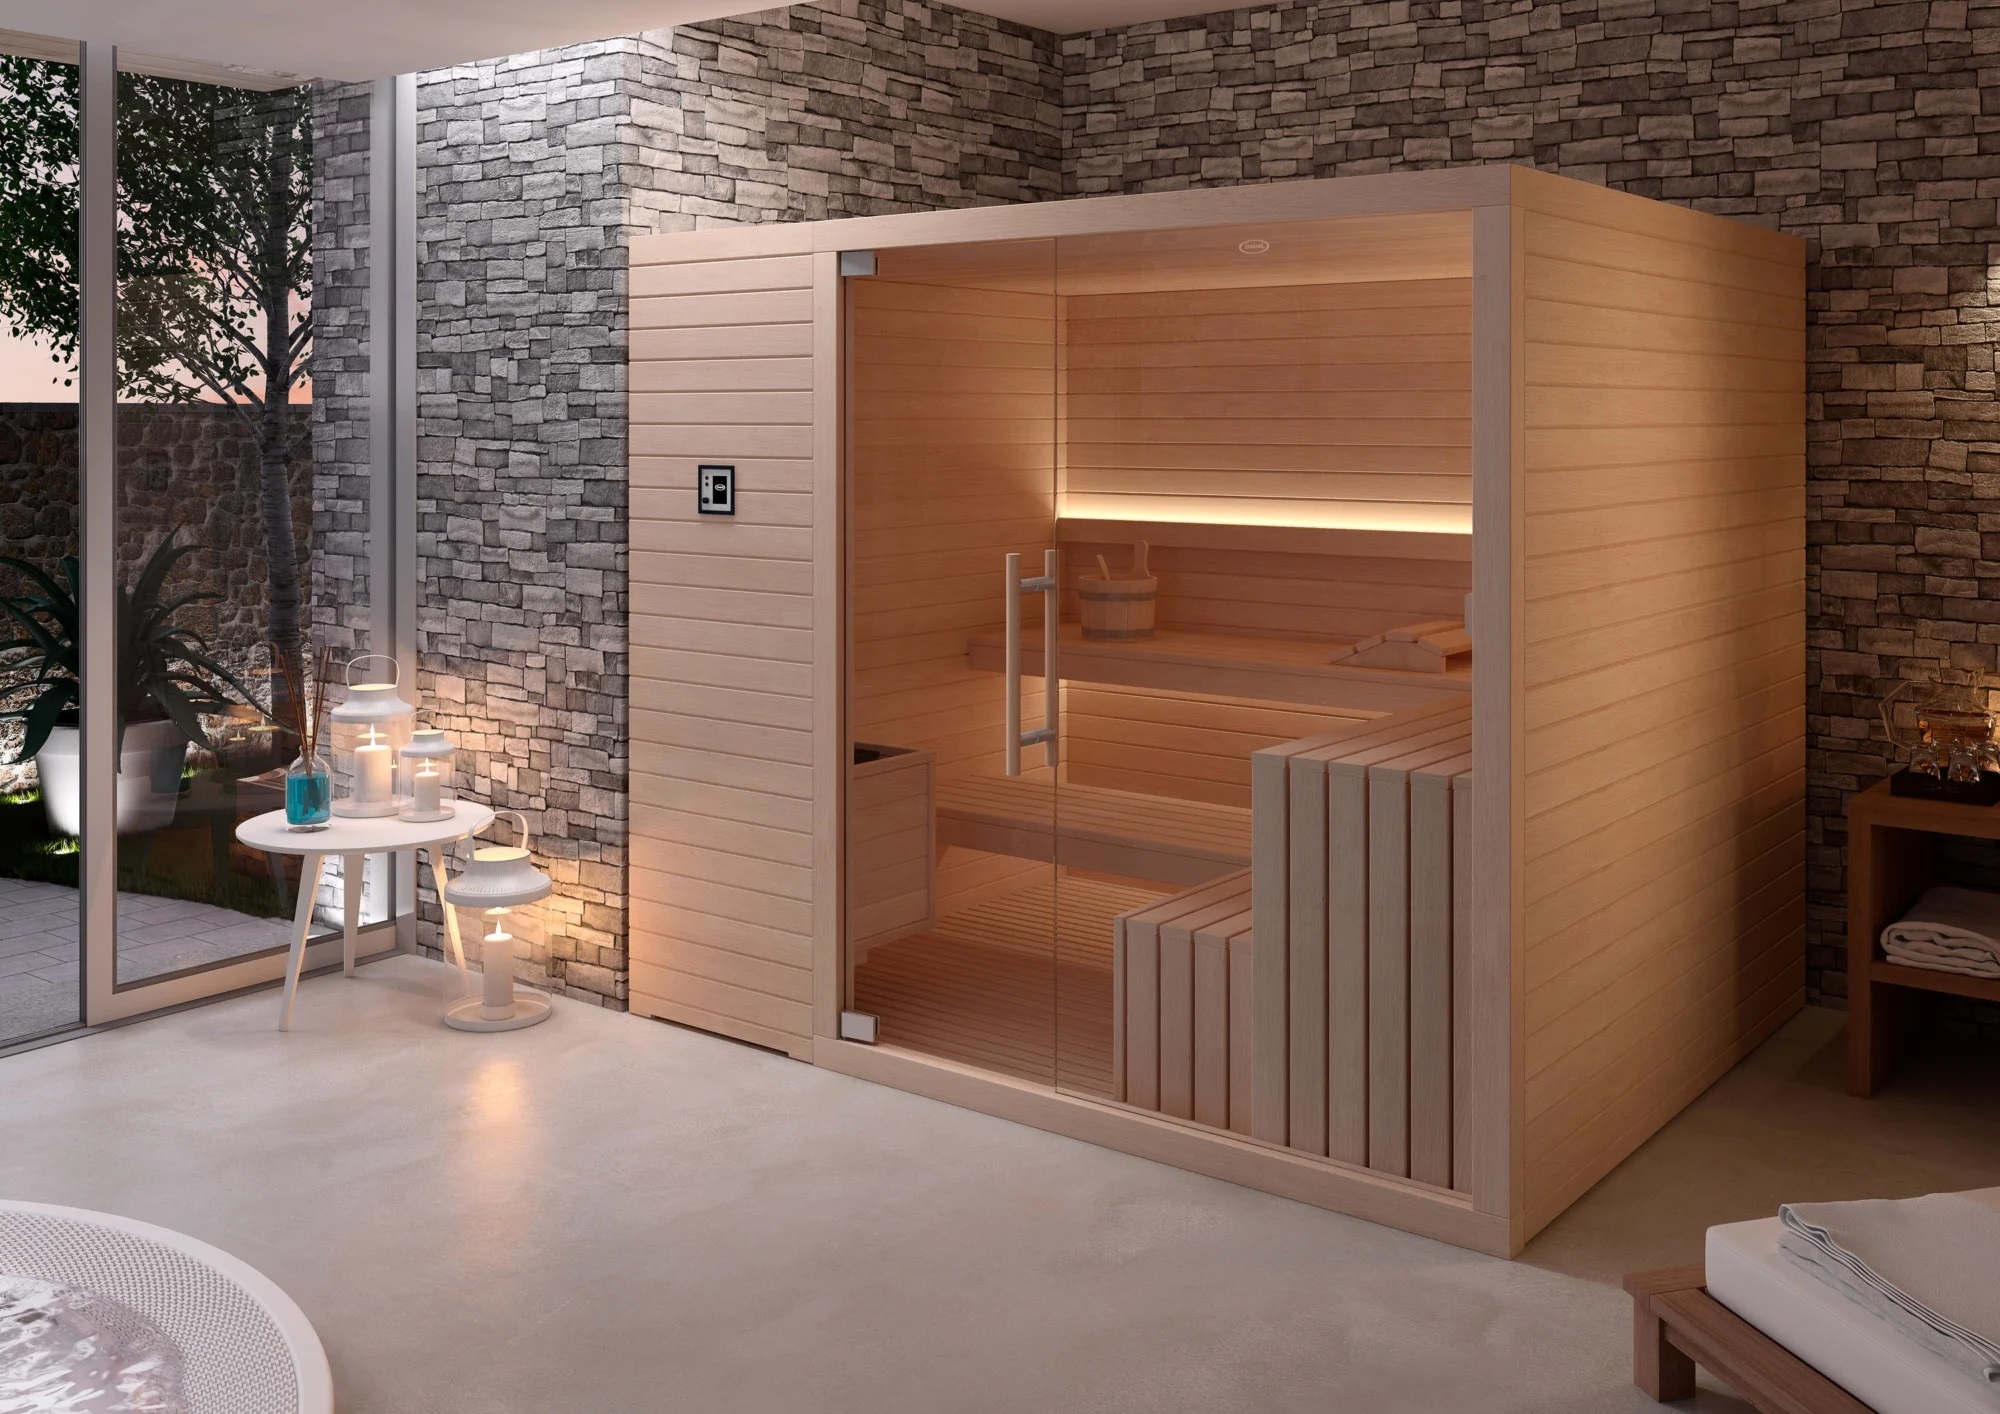 Sauna humide Hammam ou sauna sec. Lequel est le meilleur?